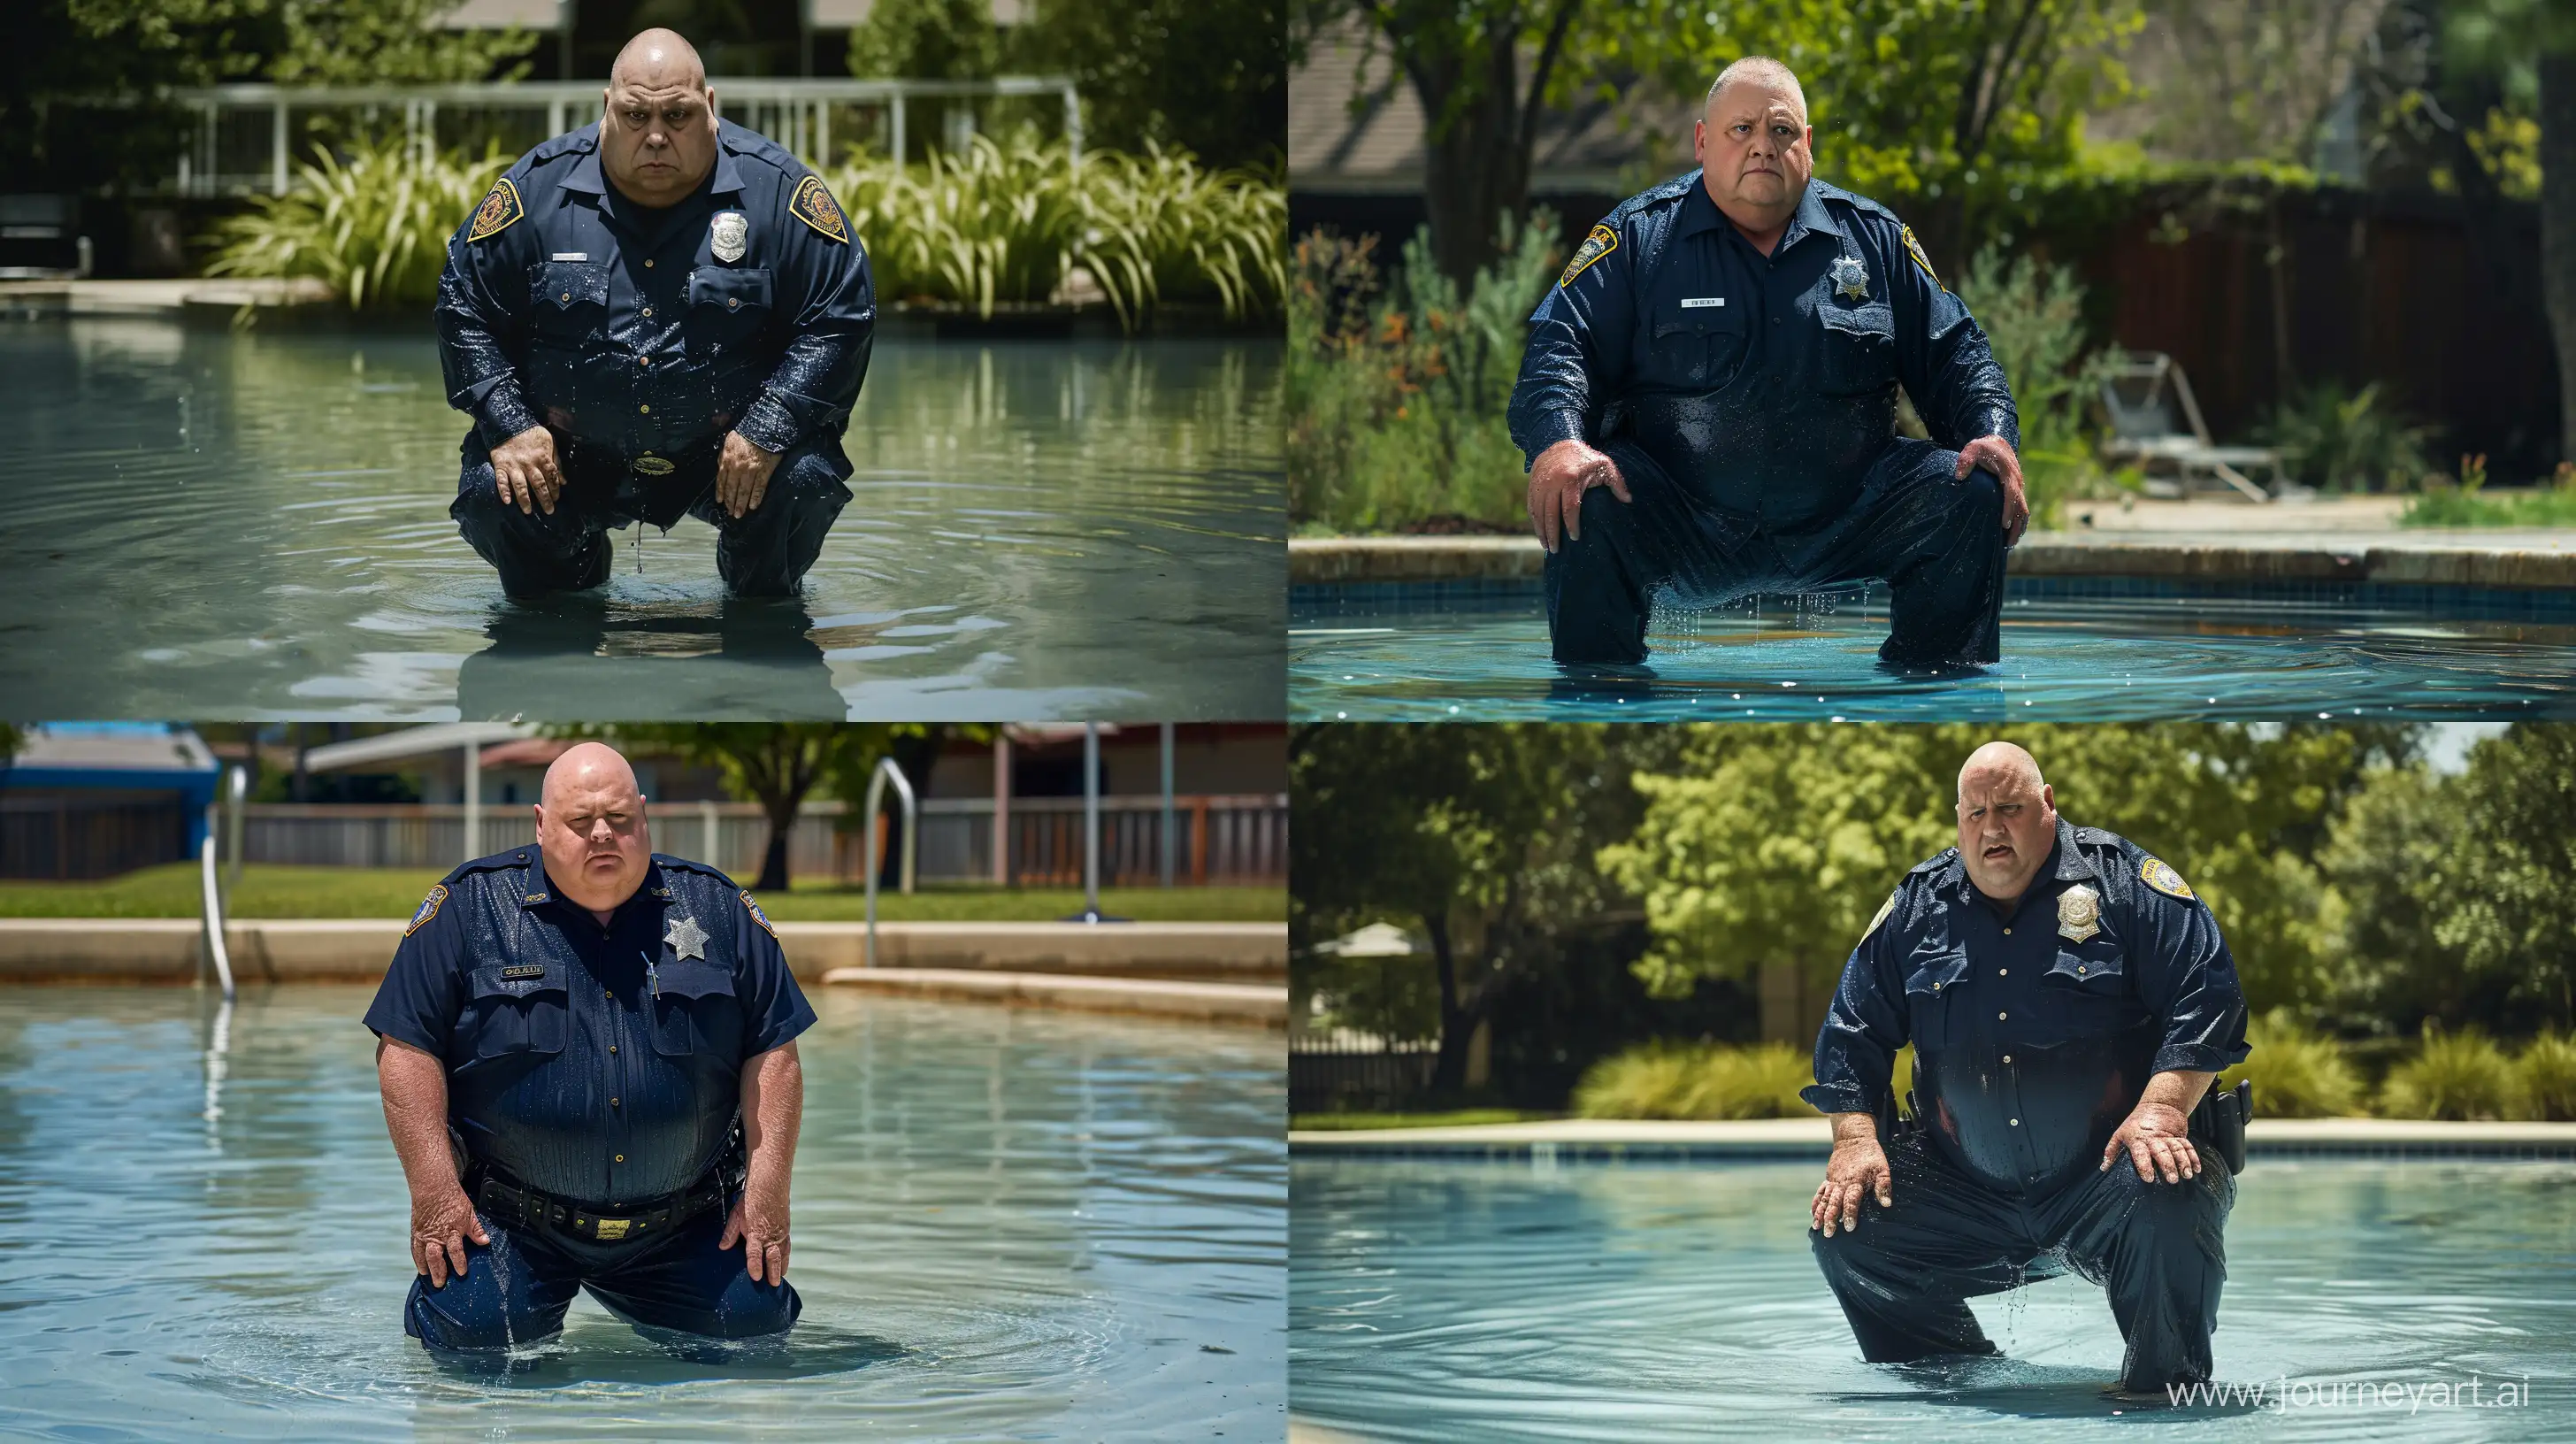 Elderly-Policeman-Kneeling-in-Shallow-Pool-Outdoor-HighResolution-Image